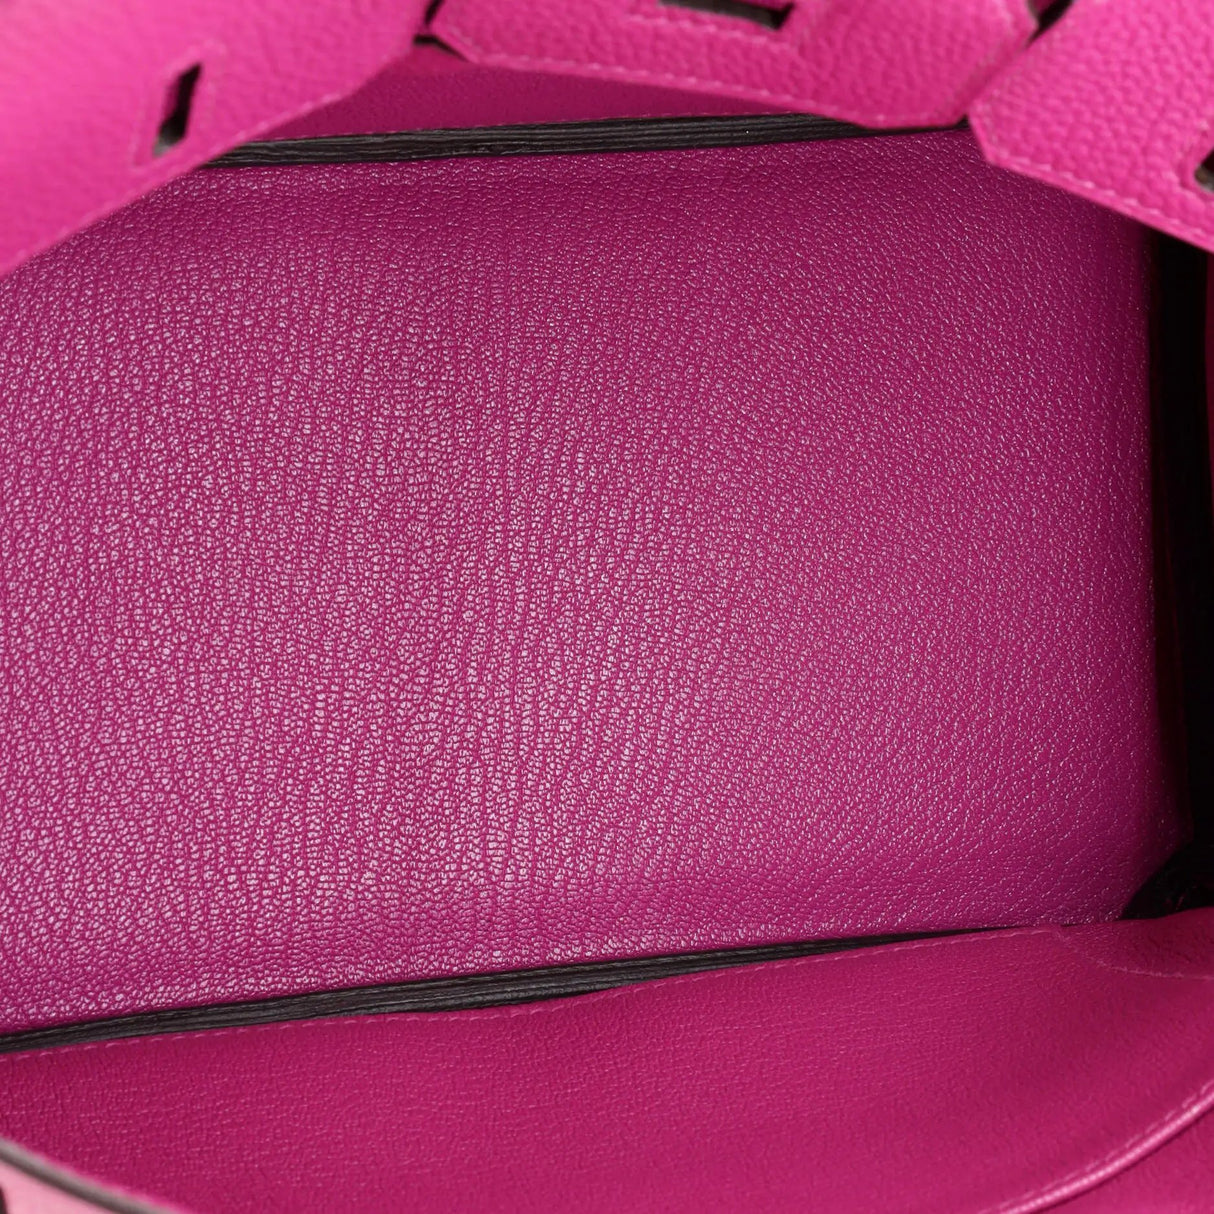 Birkin 25 Handbag in Rose Pourpre - Preowned Preowned HERMES - LOLAMIR